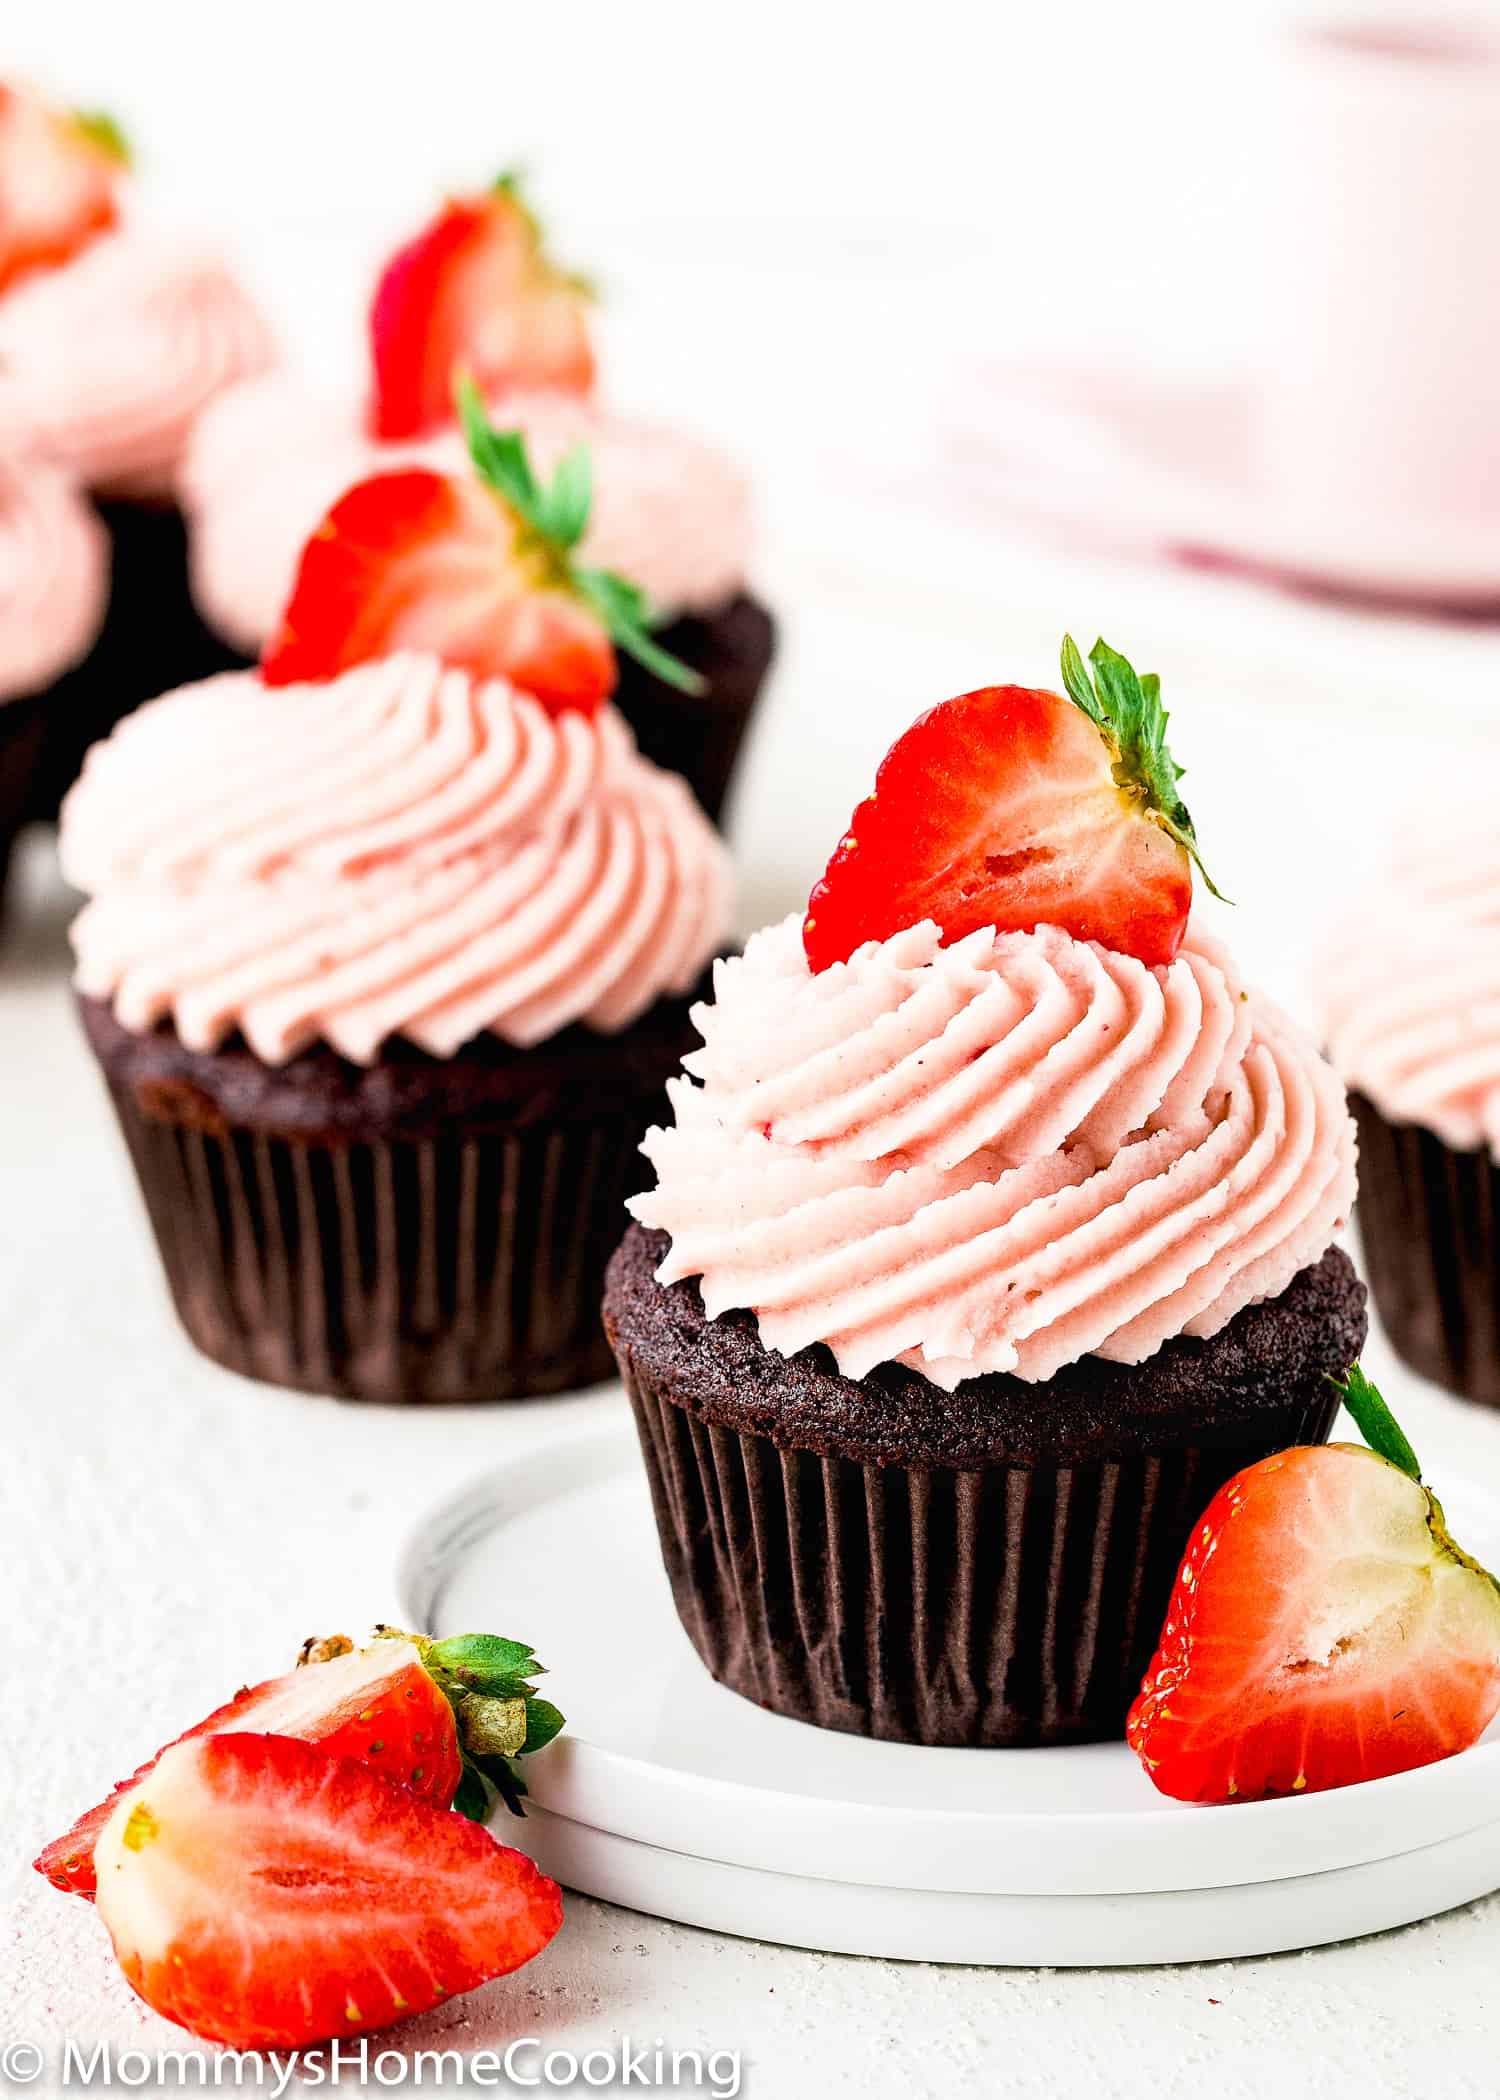 Eggless Chocolate Strawberry Cupcakes with fresh strawberries